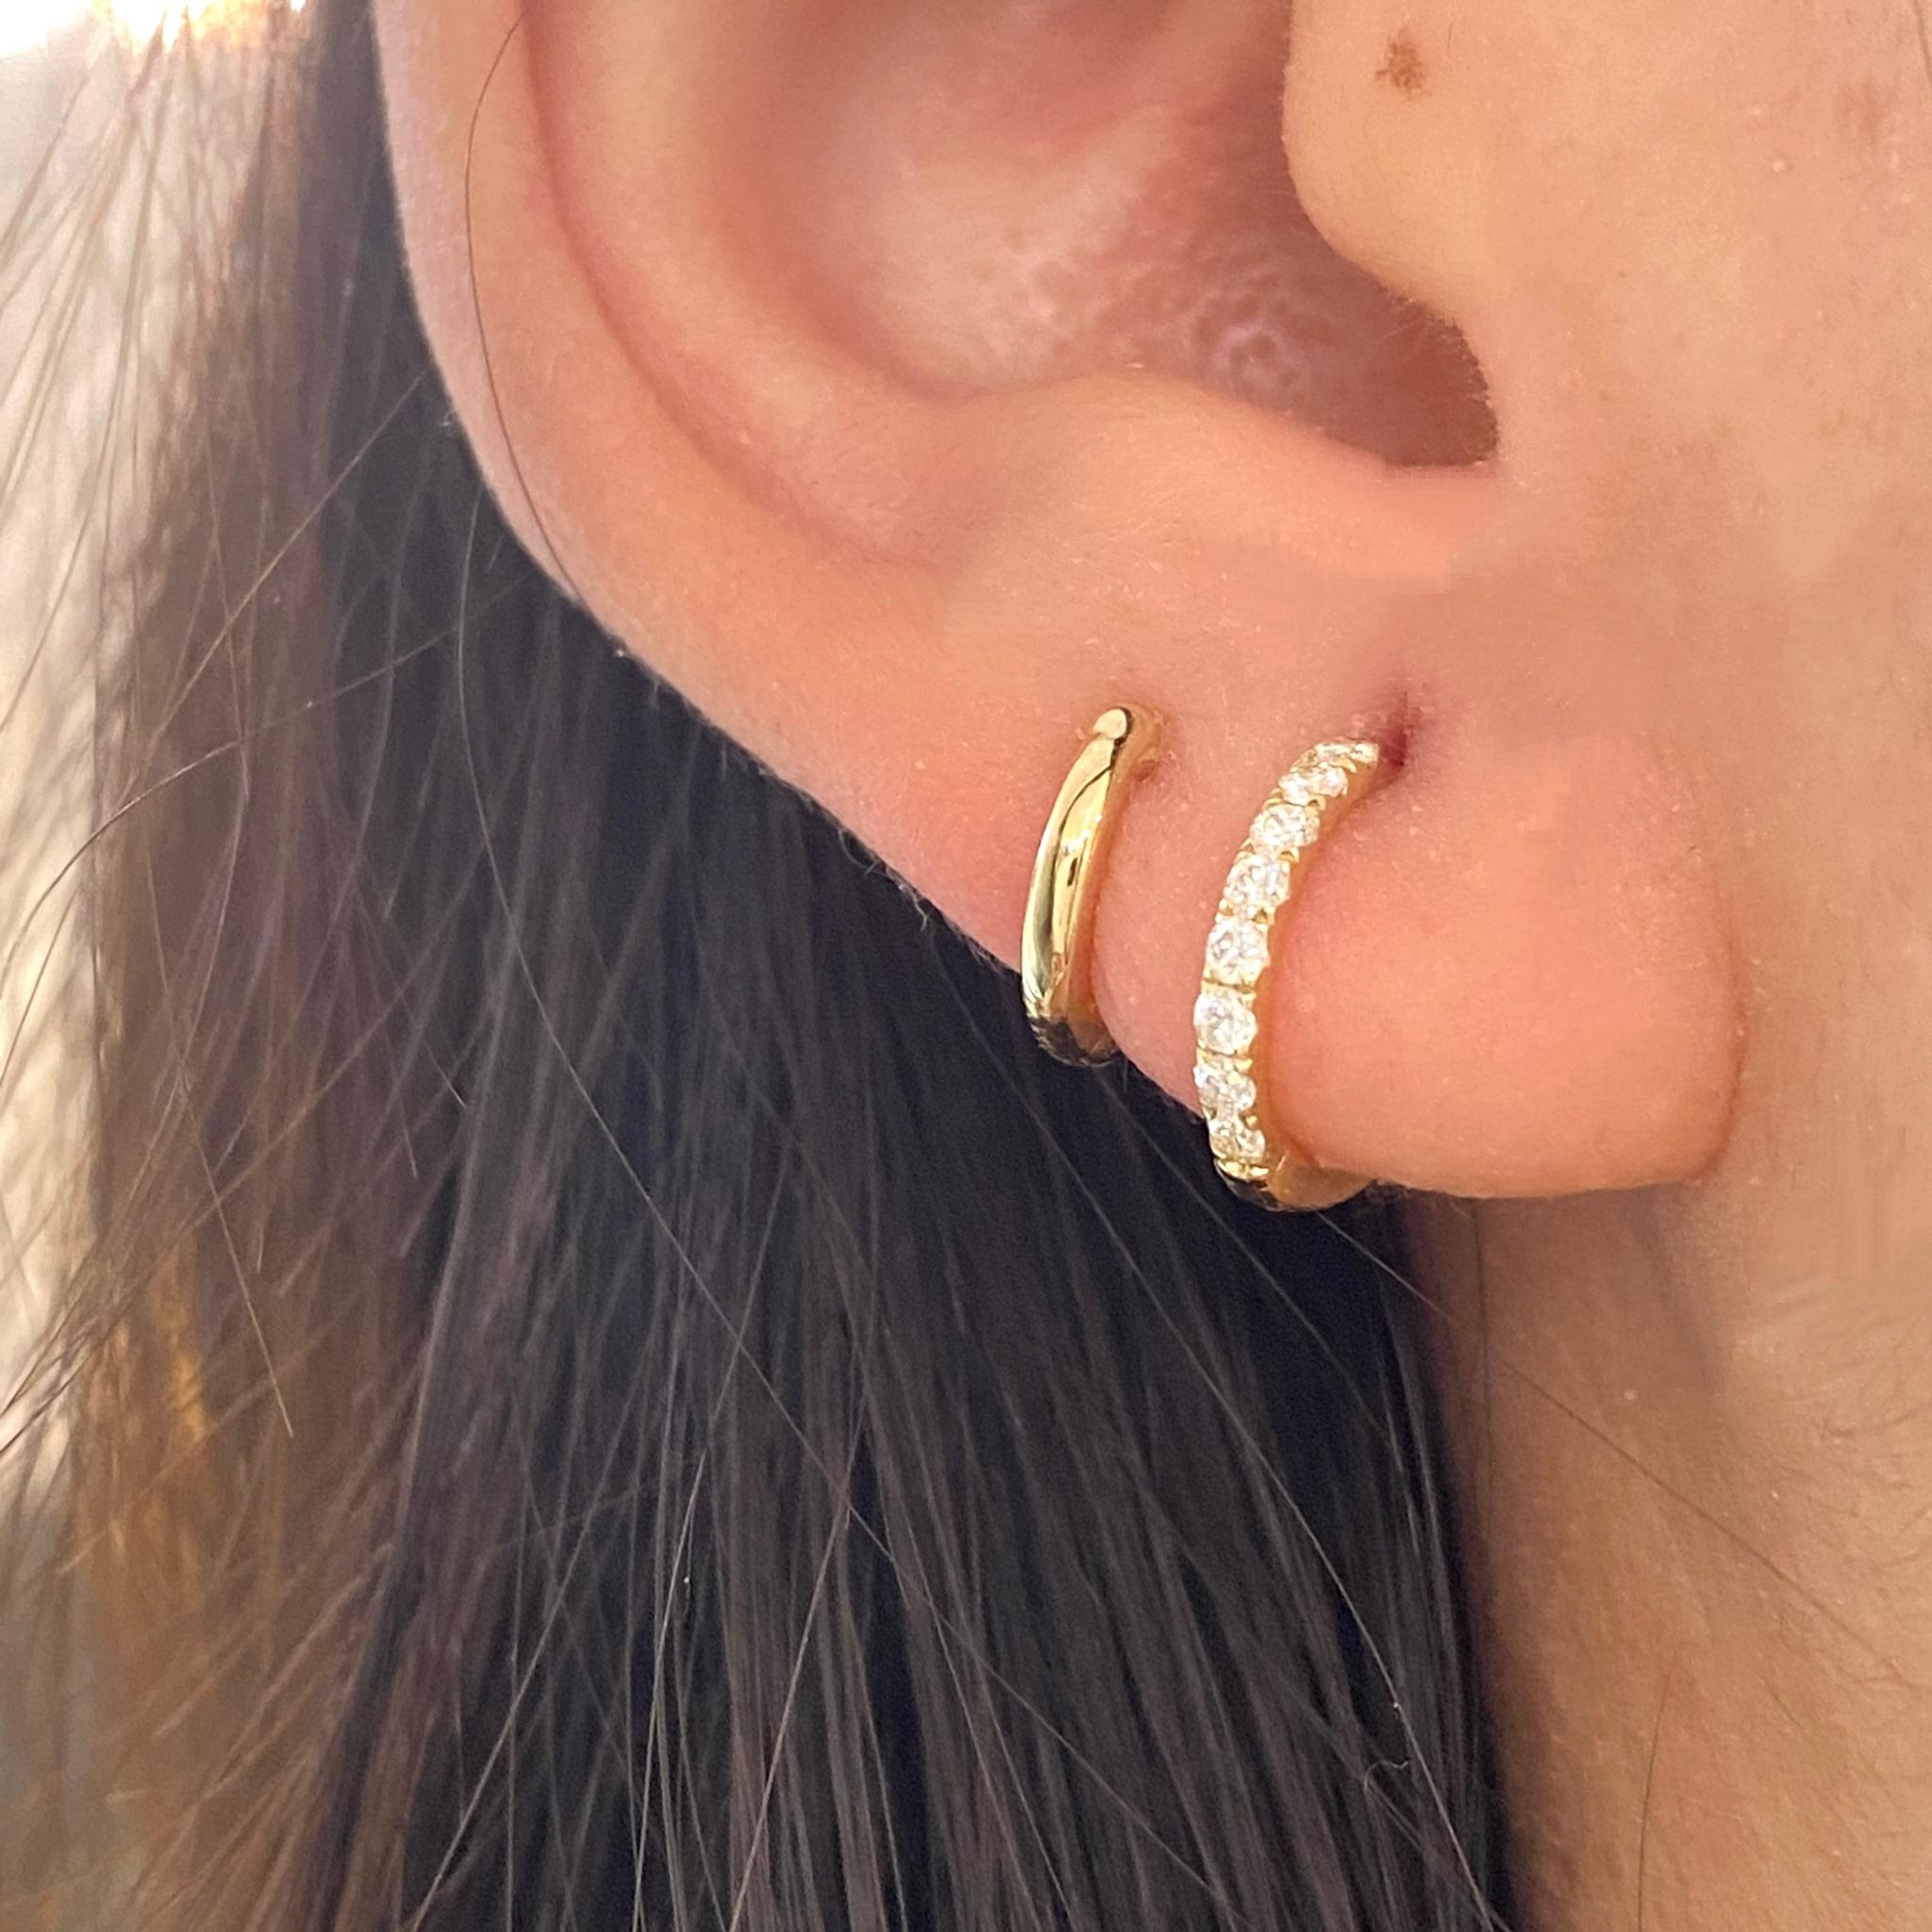 one earring that looks like two